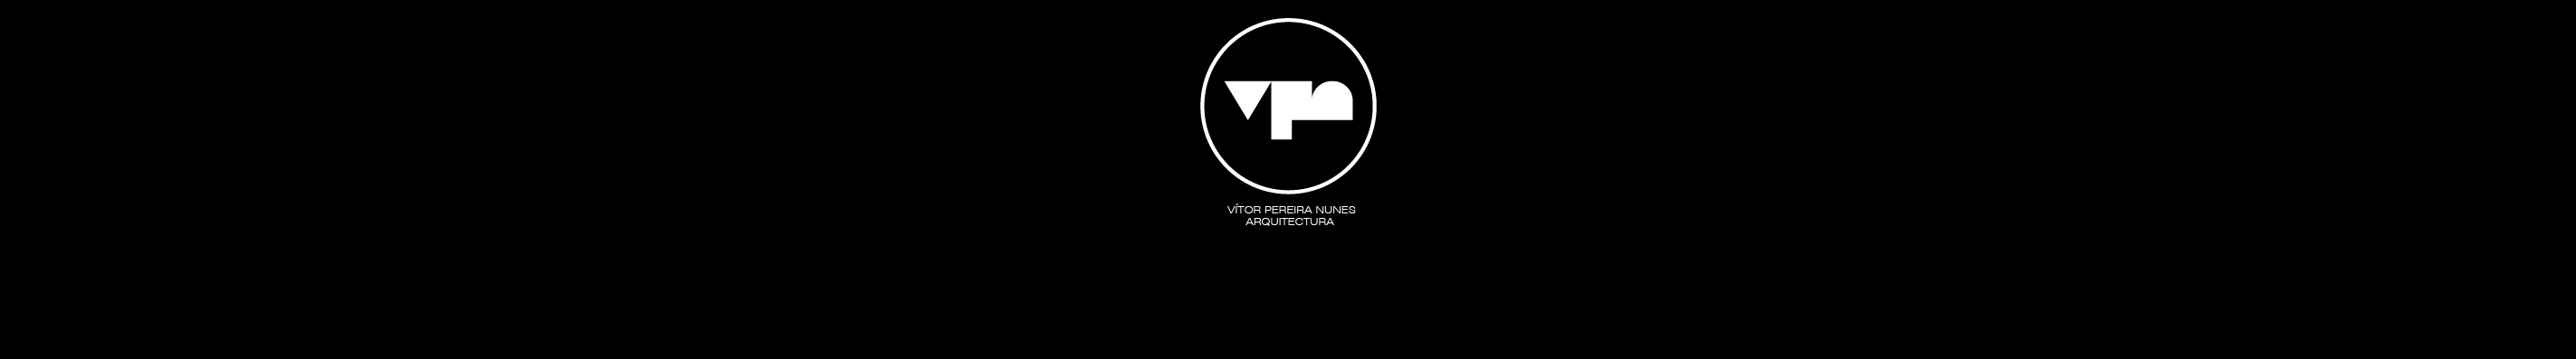 Banner de perfil de Vítor Pereira Nunes Archviz